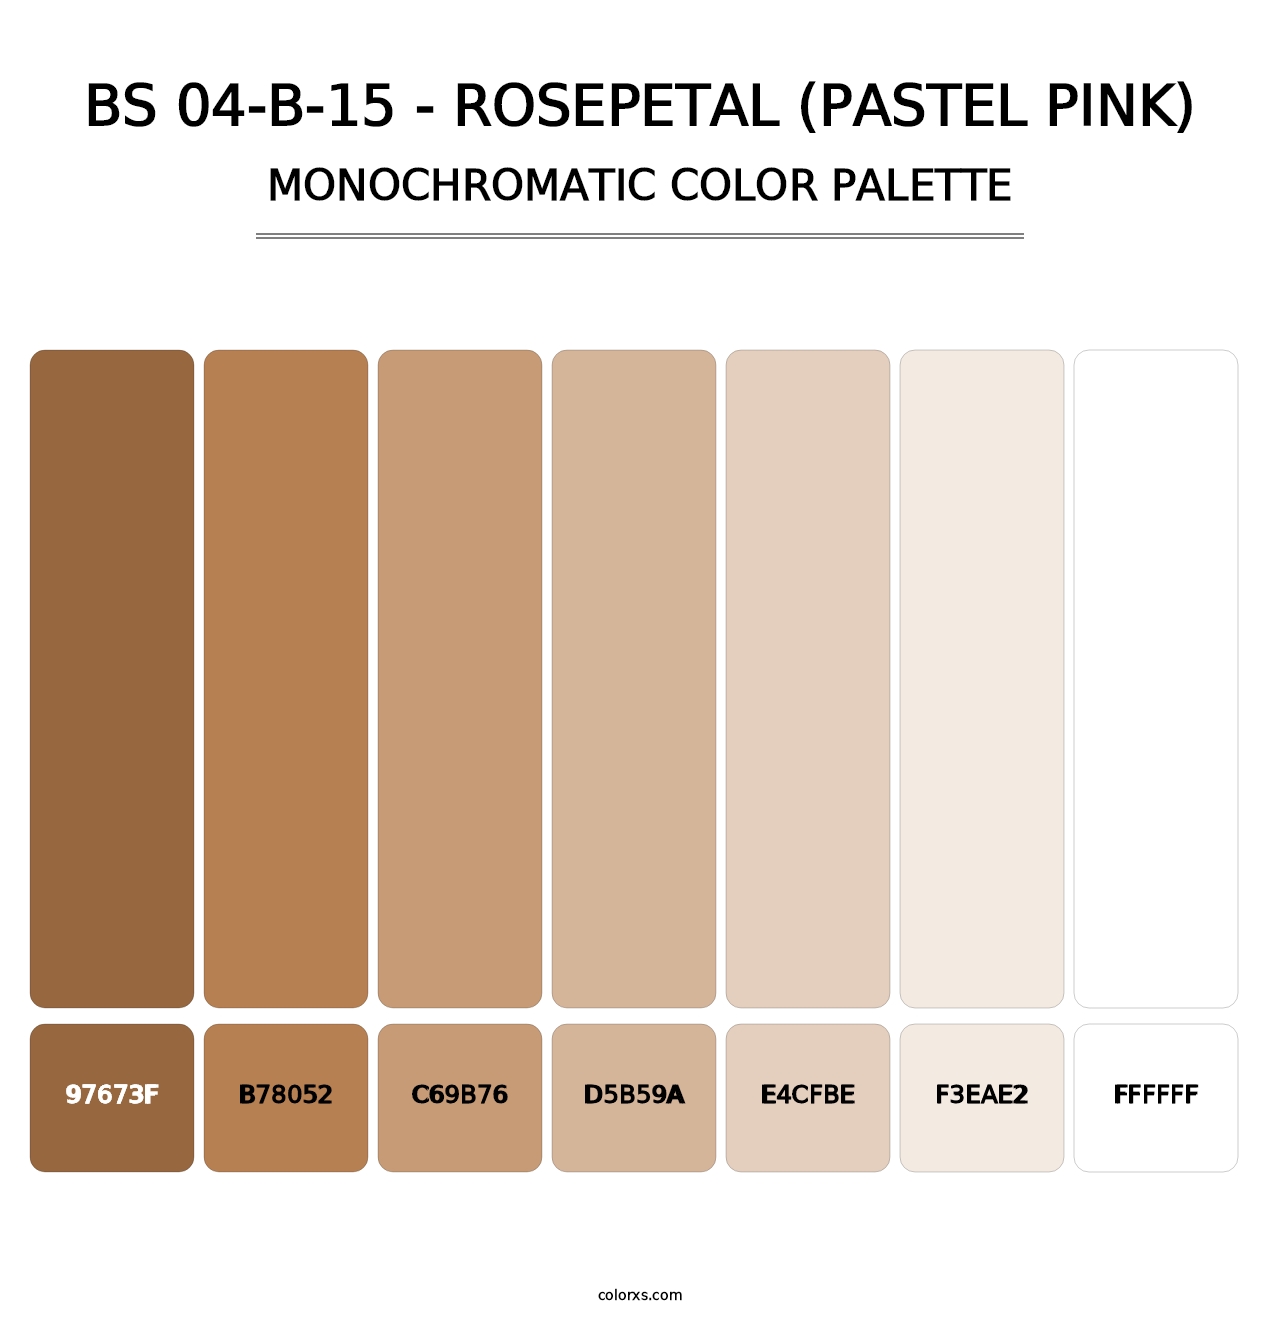 BS 04-B-15 - Rosepetal (Pastel Pink) - Monochromatic Color Palette